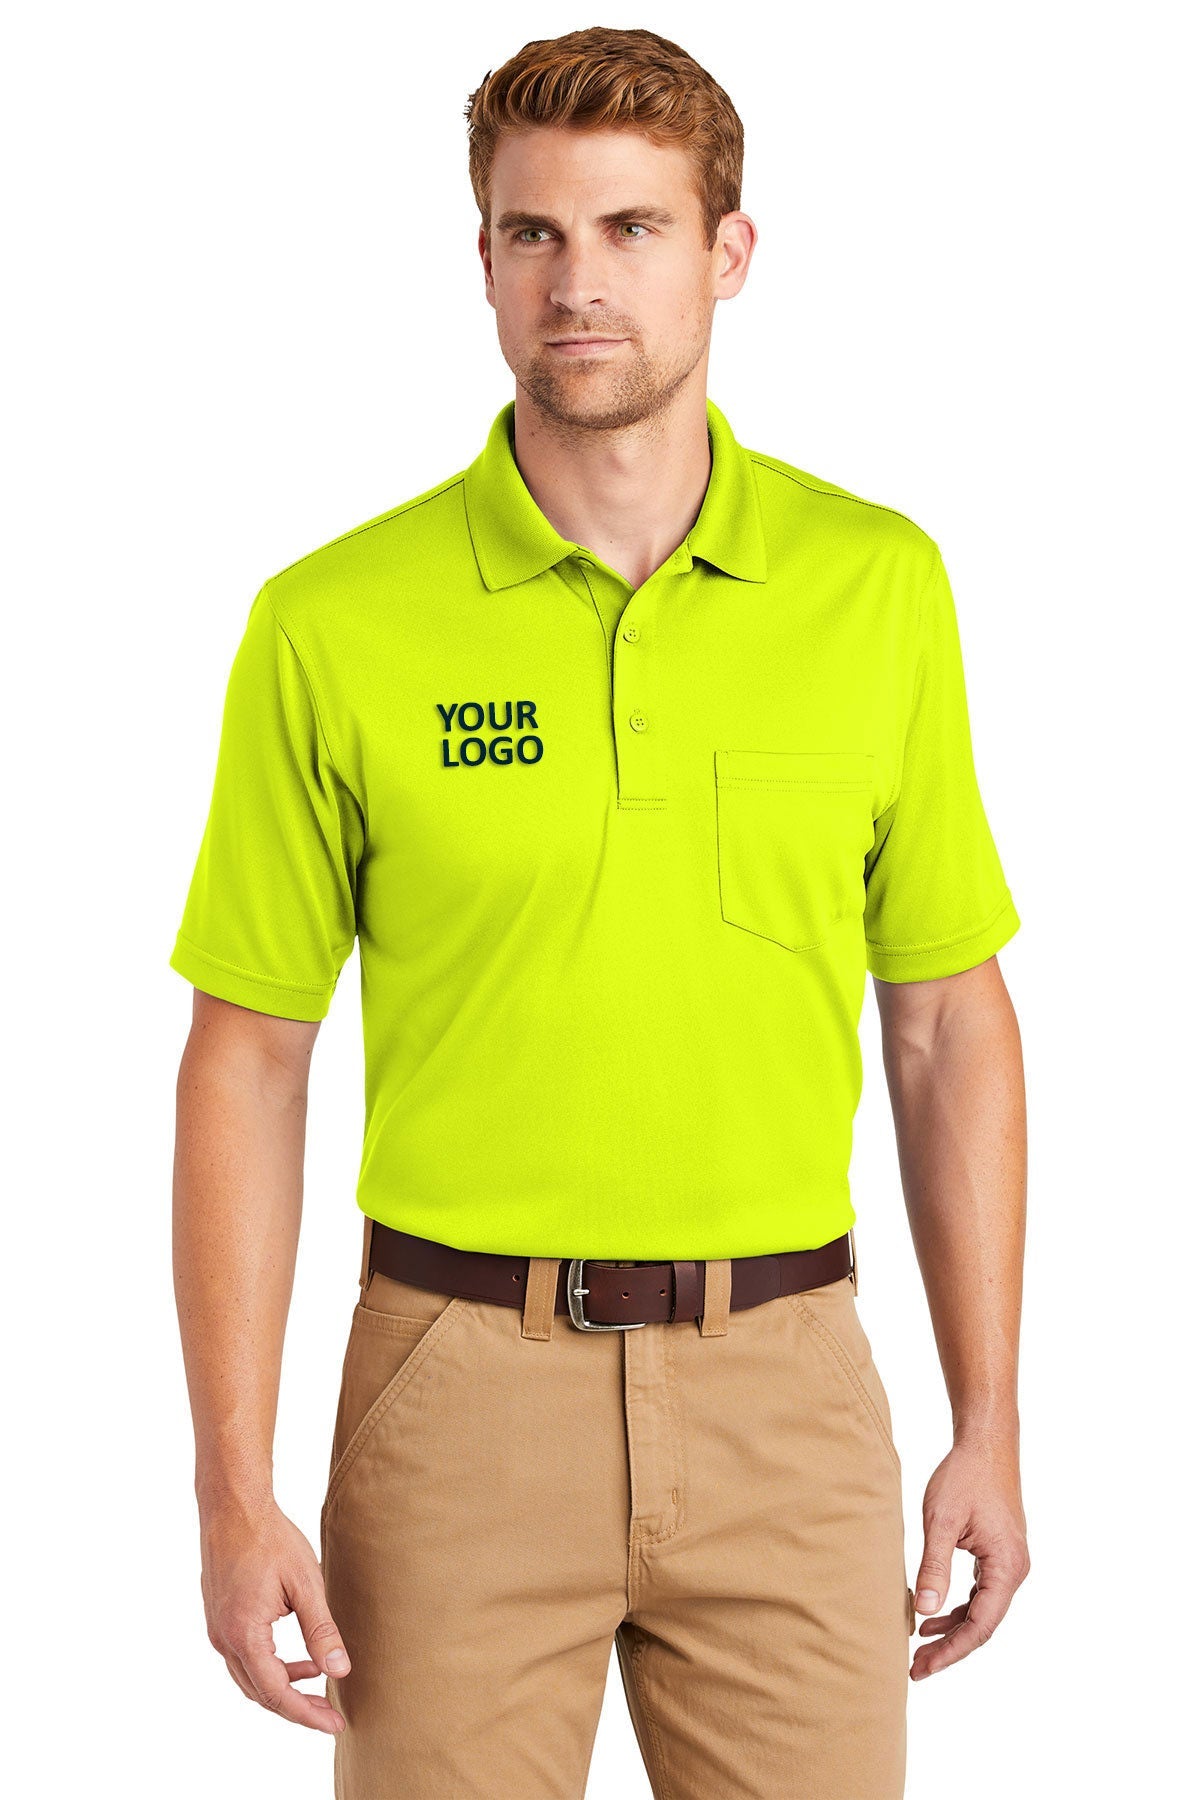 CornerStone Safety Yellow CS412P custom work polo shirts